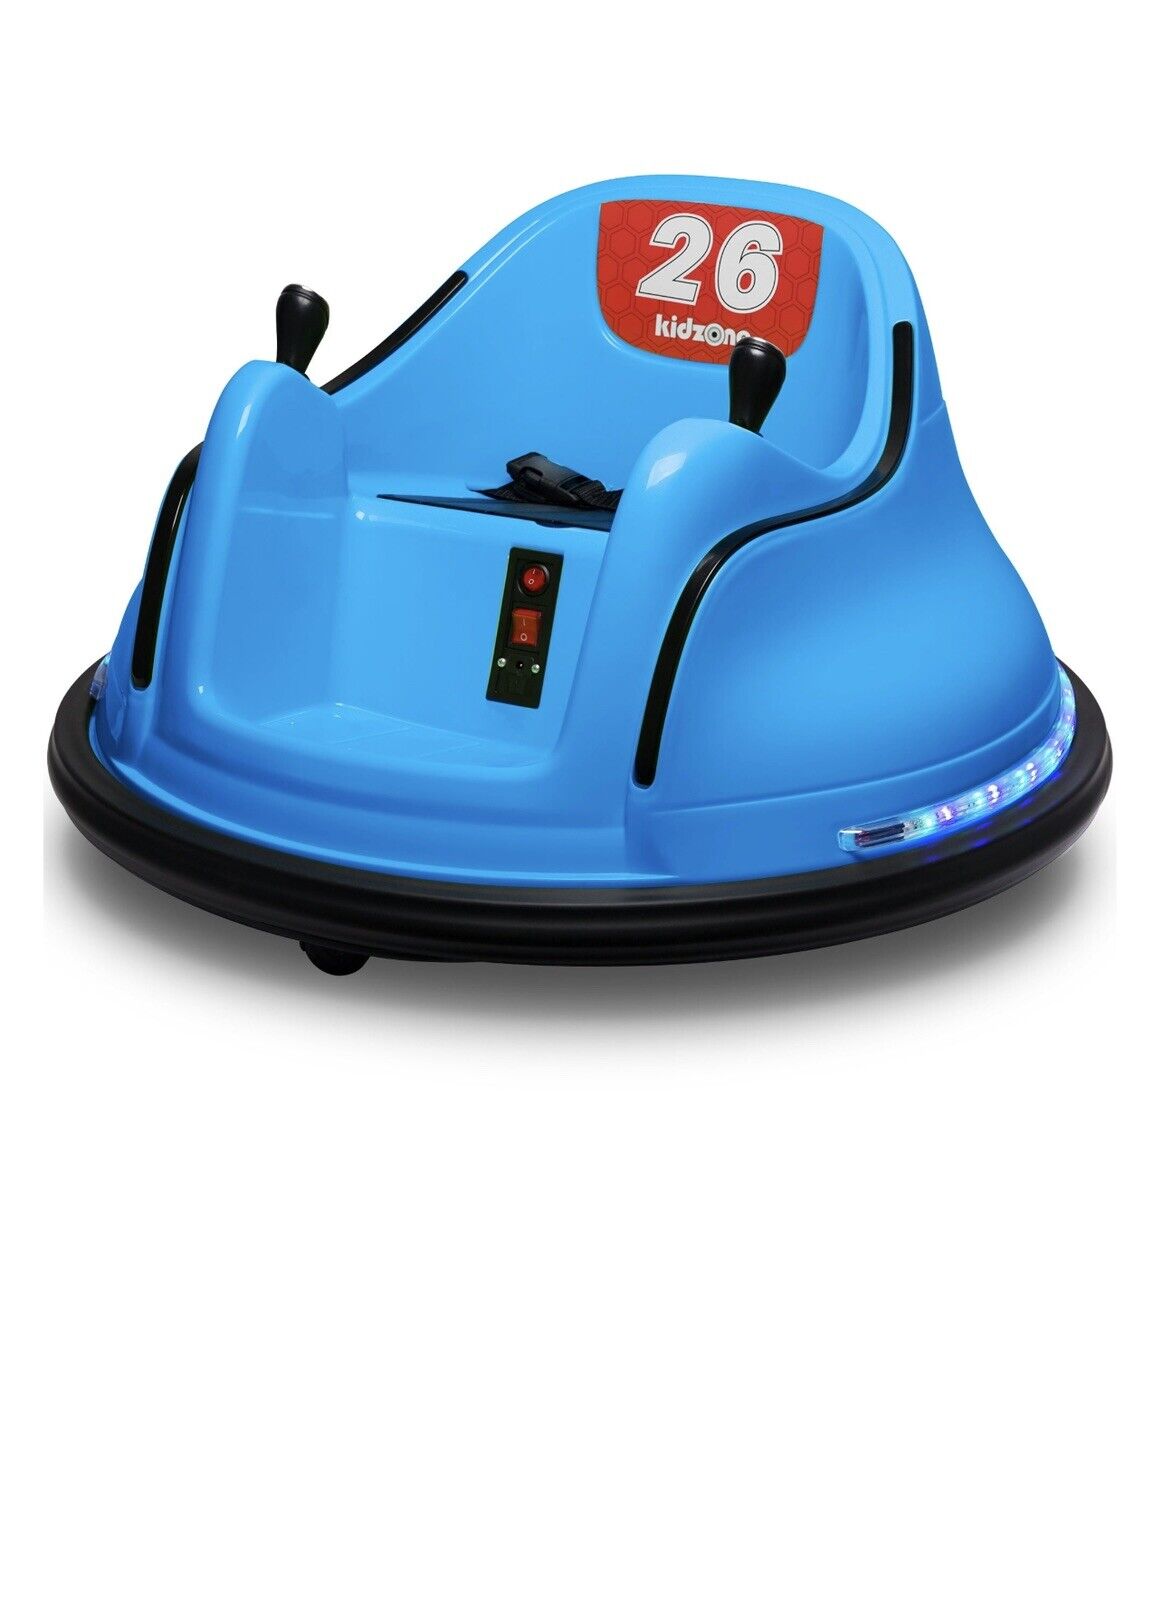 Kidzone DIY Race #00-99 6V Kids Toy Electric Ride On Bumper Car, 360 Spin